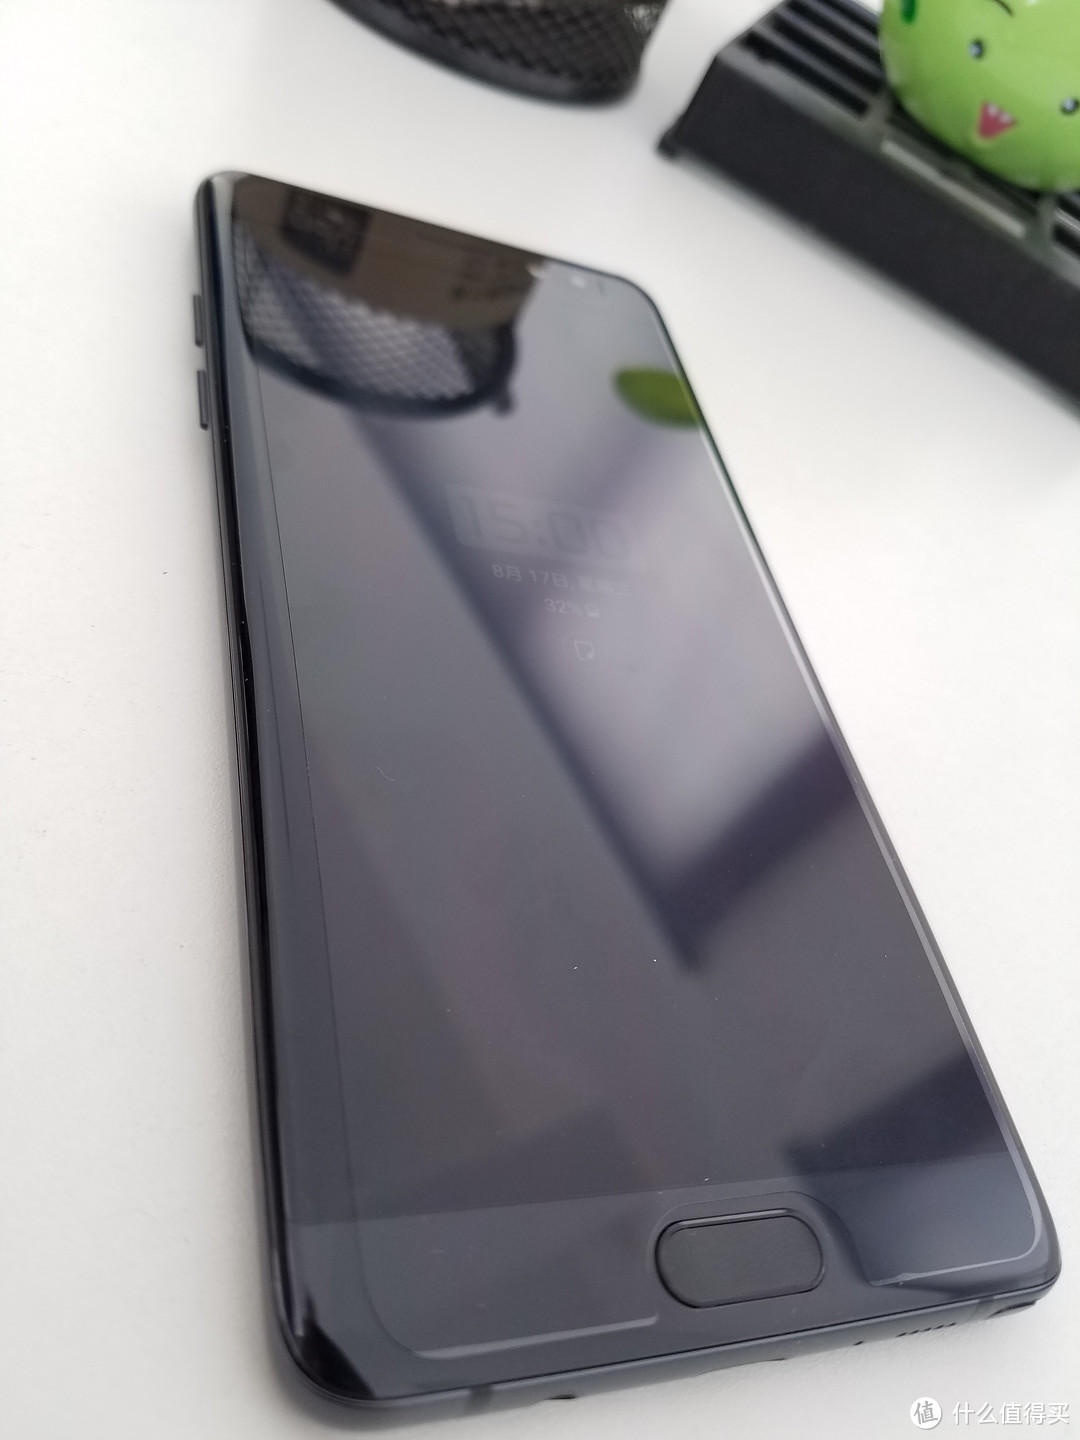 SAMSUNG 三星 Galaxy Note7 手机 开箱及简单使用感受